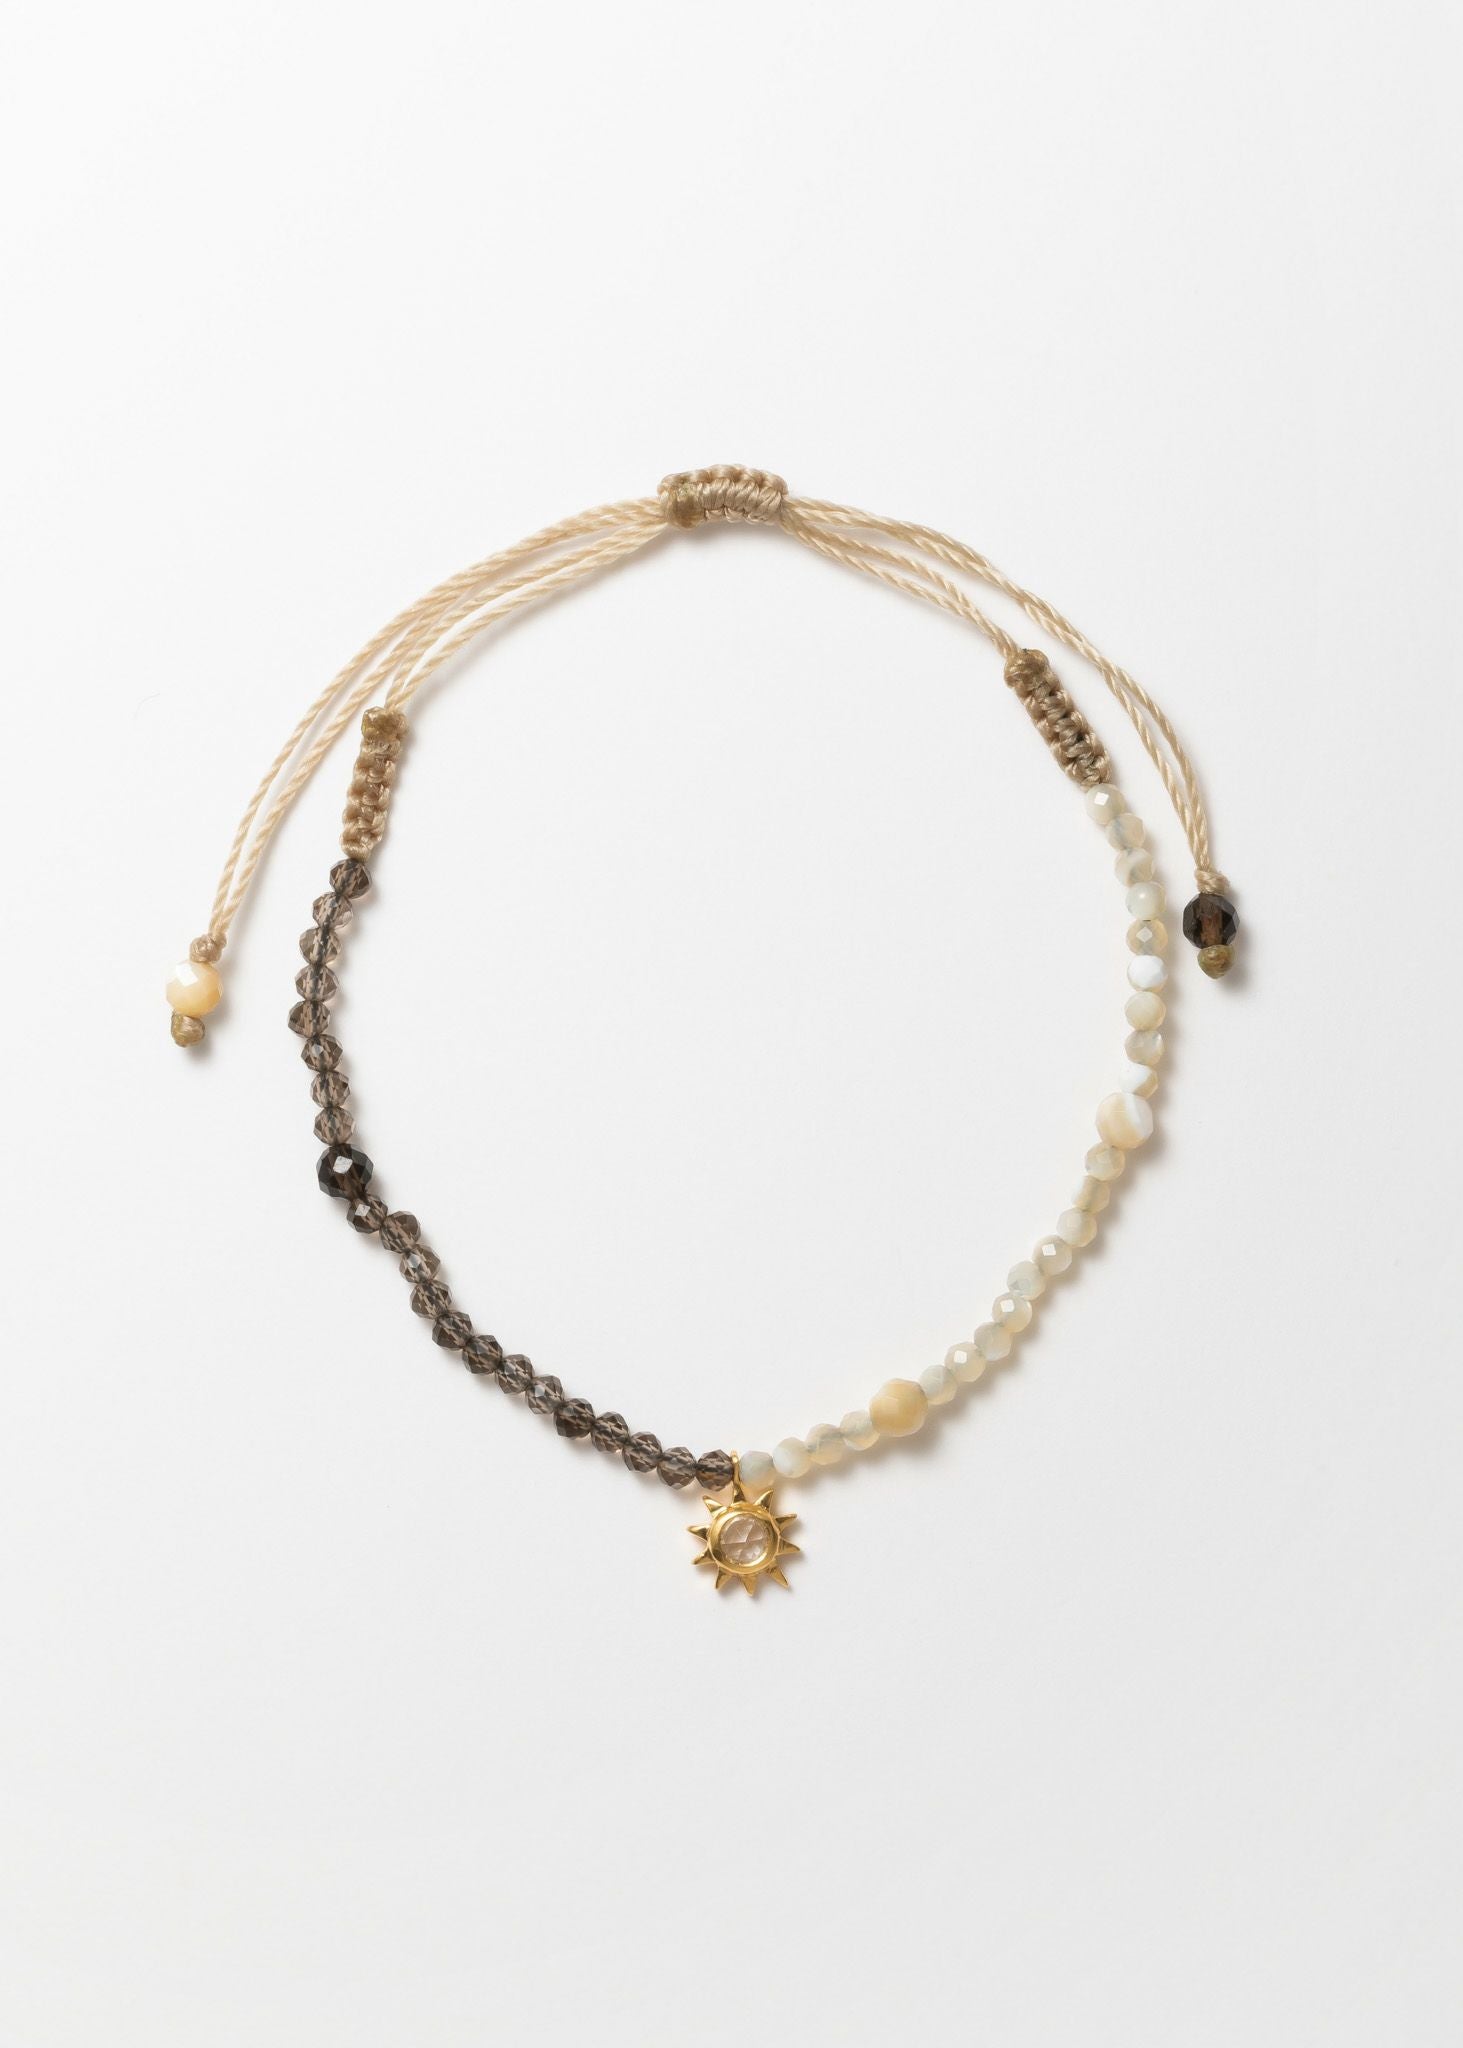 '- 蟹座 Cancer - Beads Bracelet With Charm